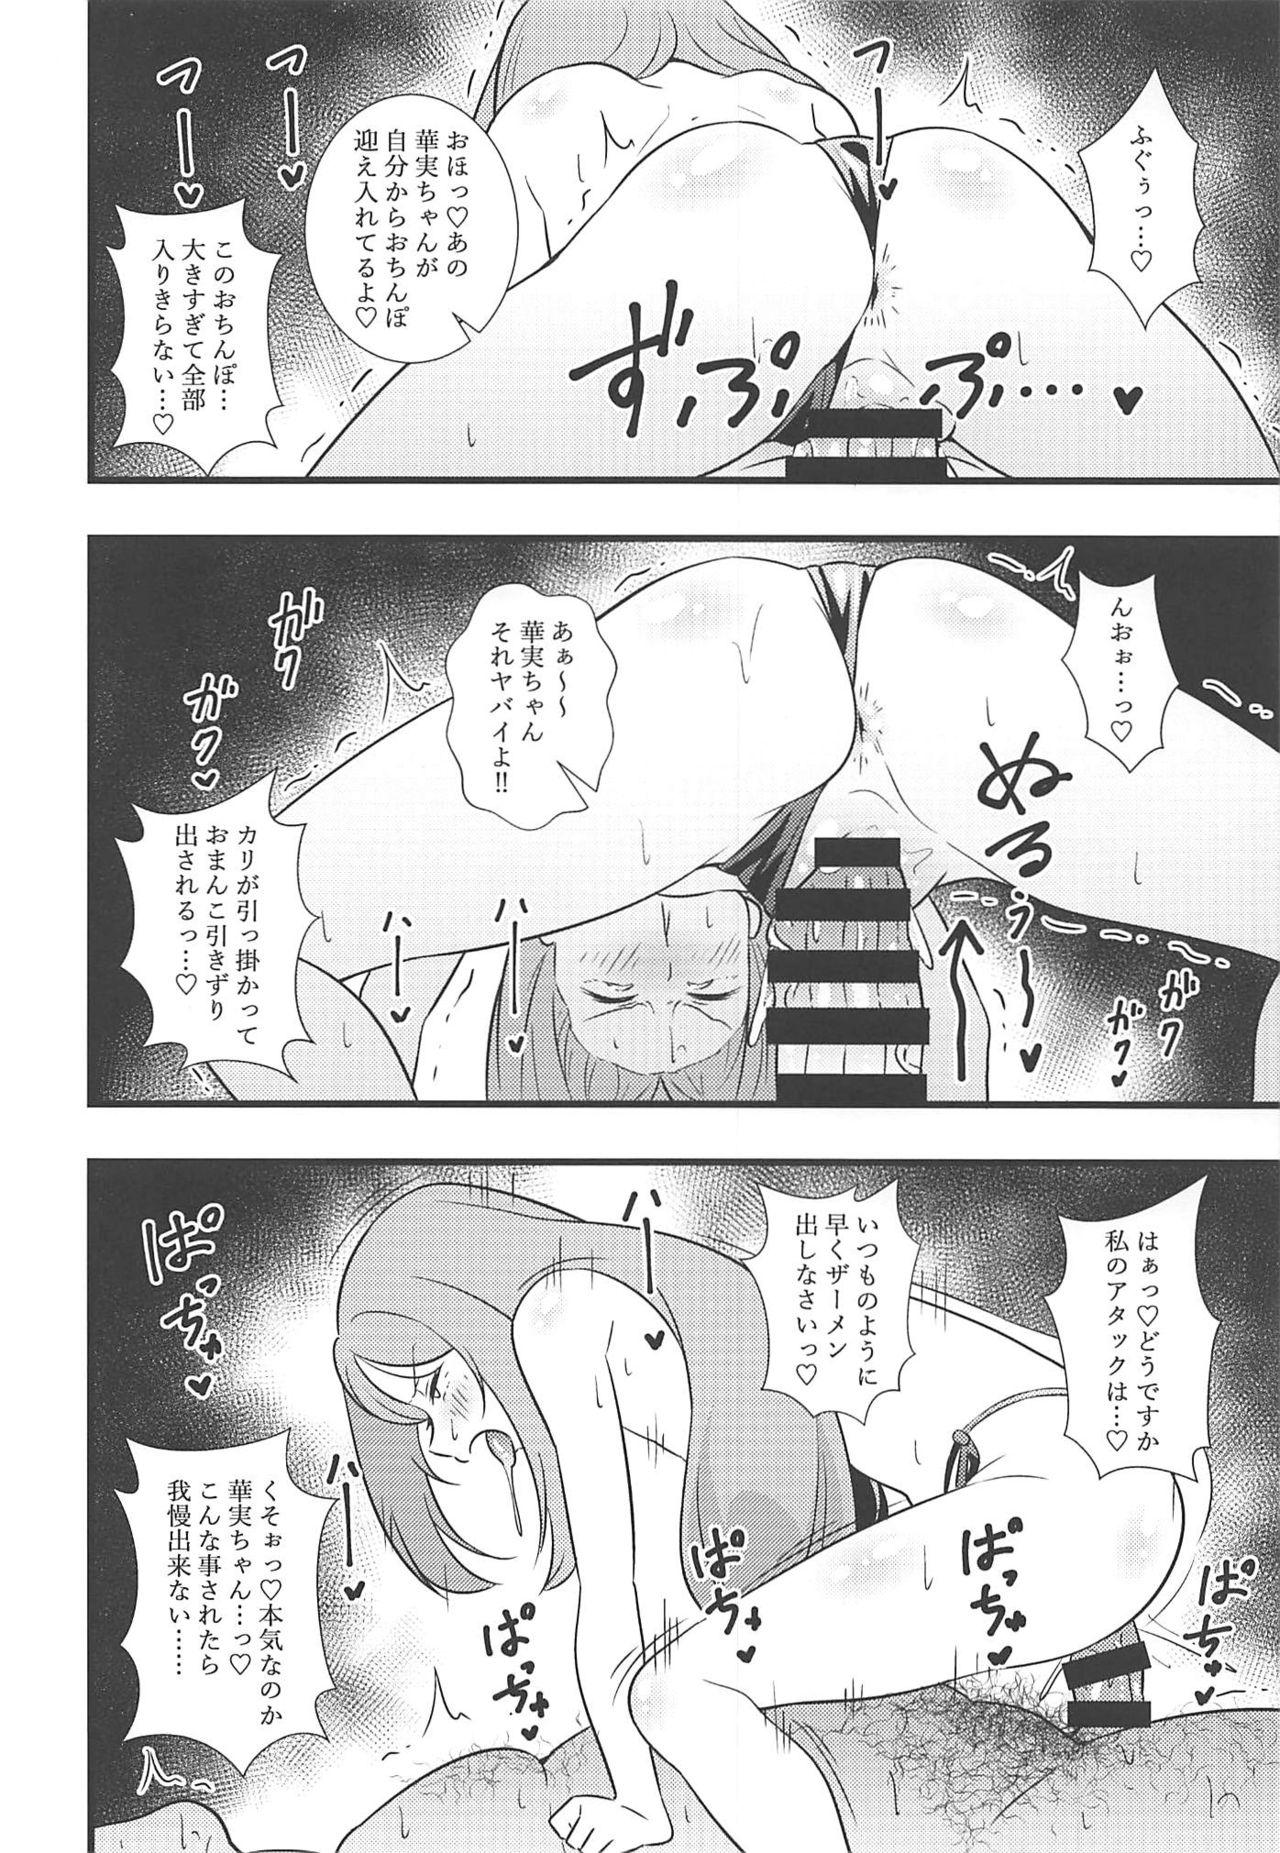 Pure18 Shouten! Harame Ore no Ragna Rock!! Risei ga Buttobu made Tanetsuke Rape - Battle spirits Spooning - Page 11